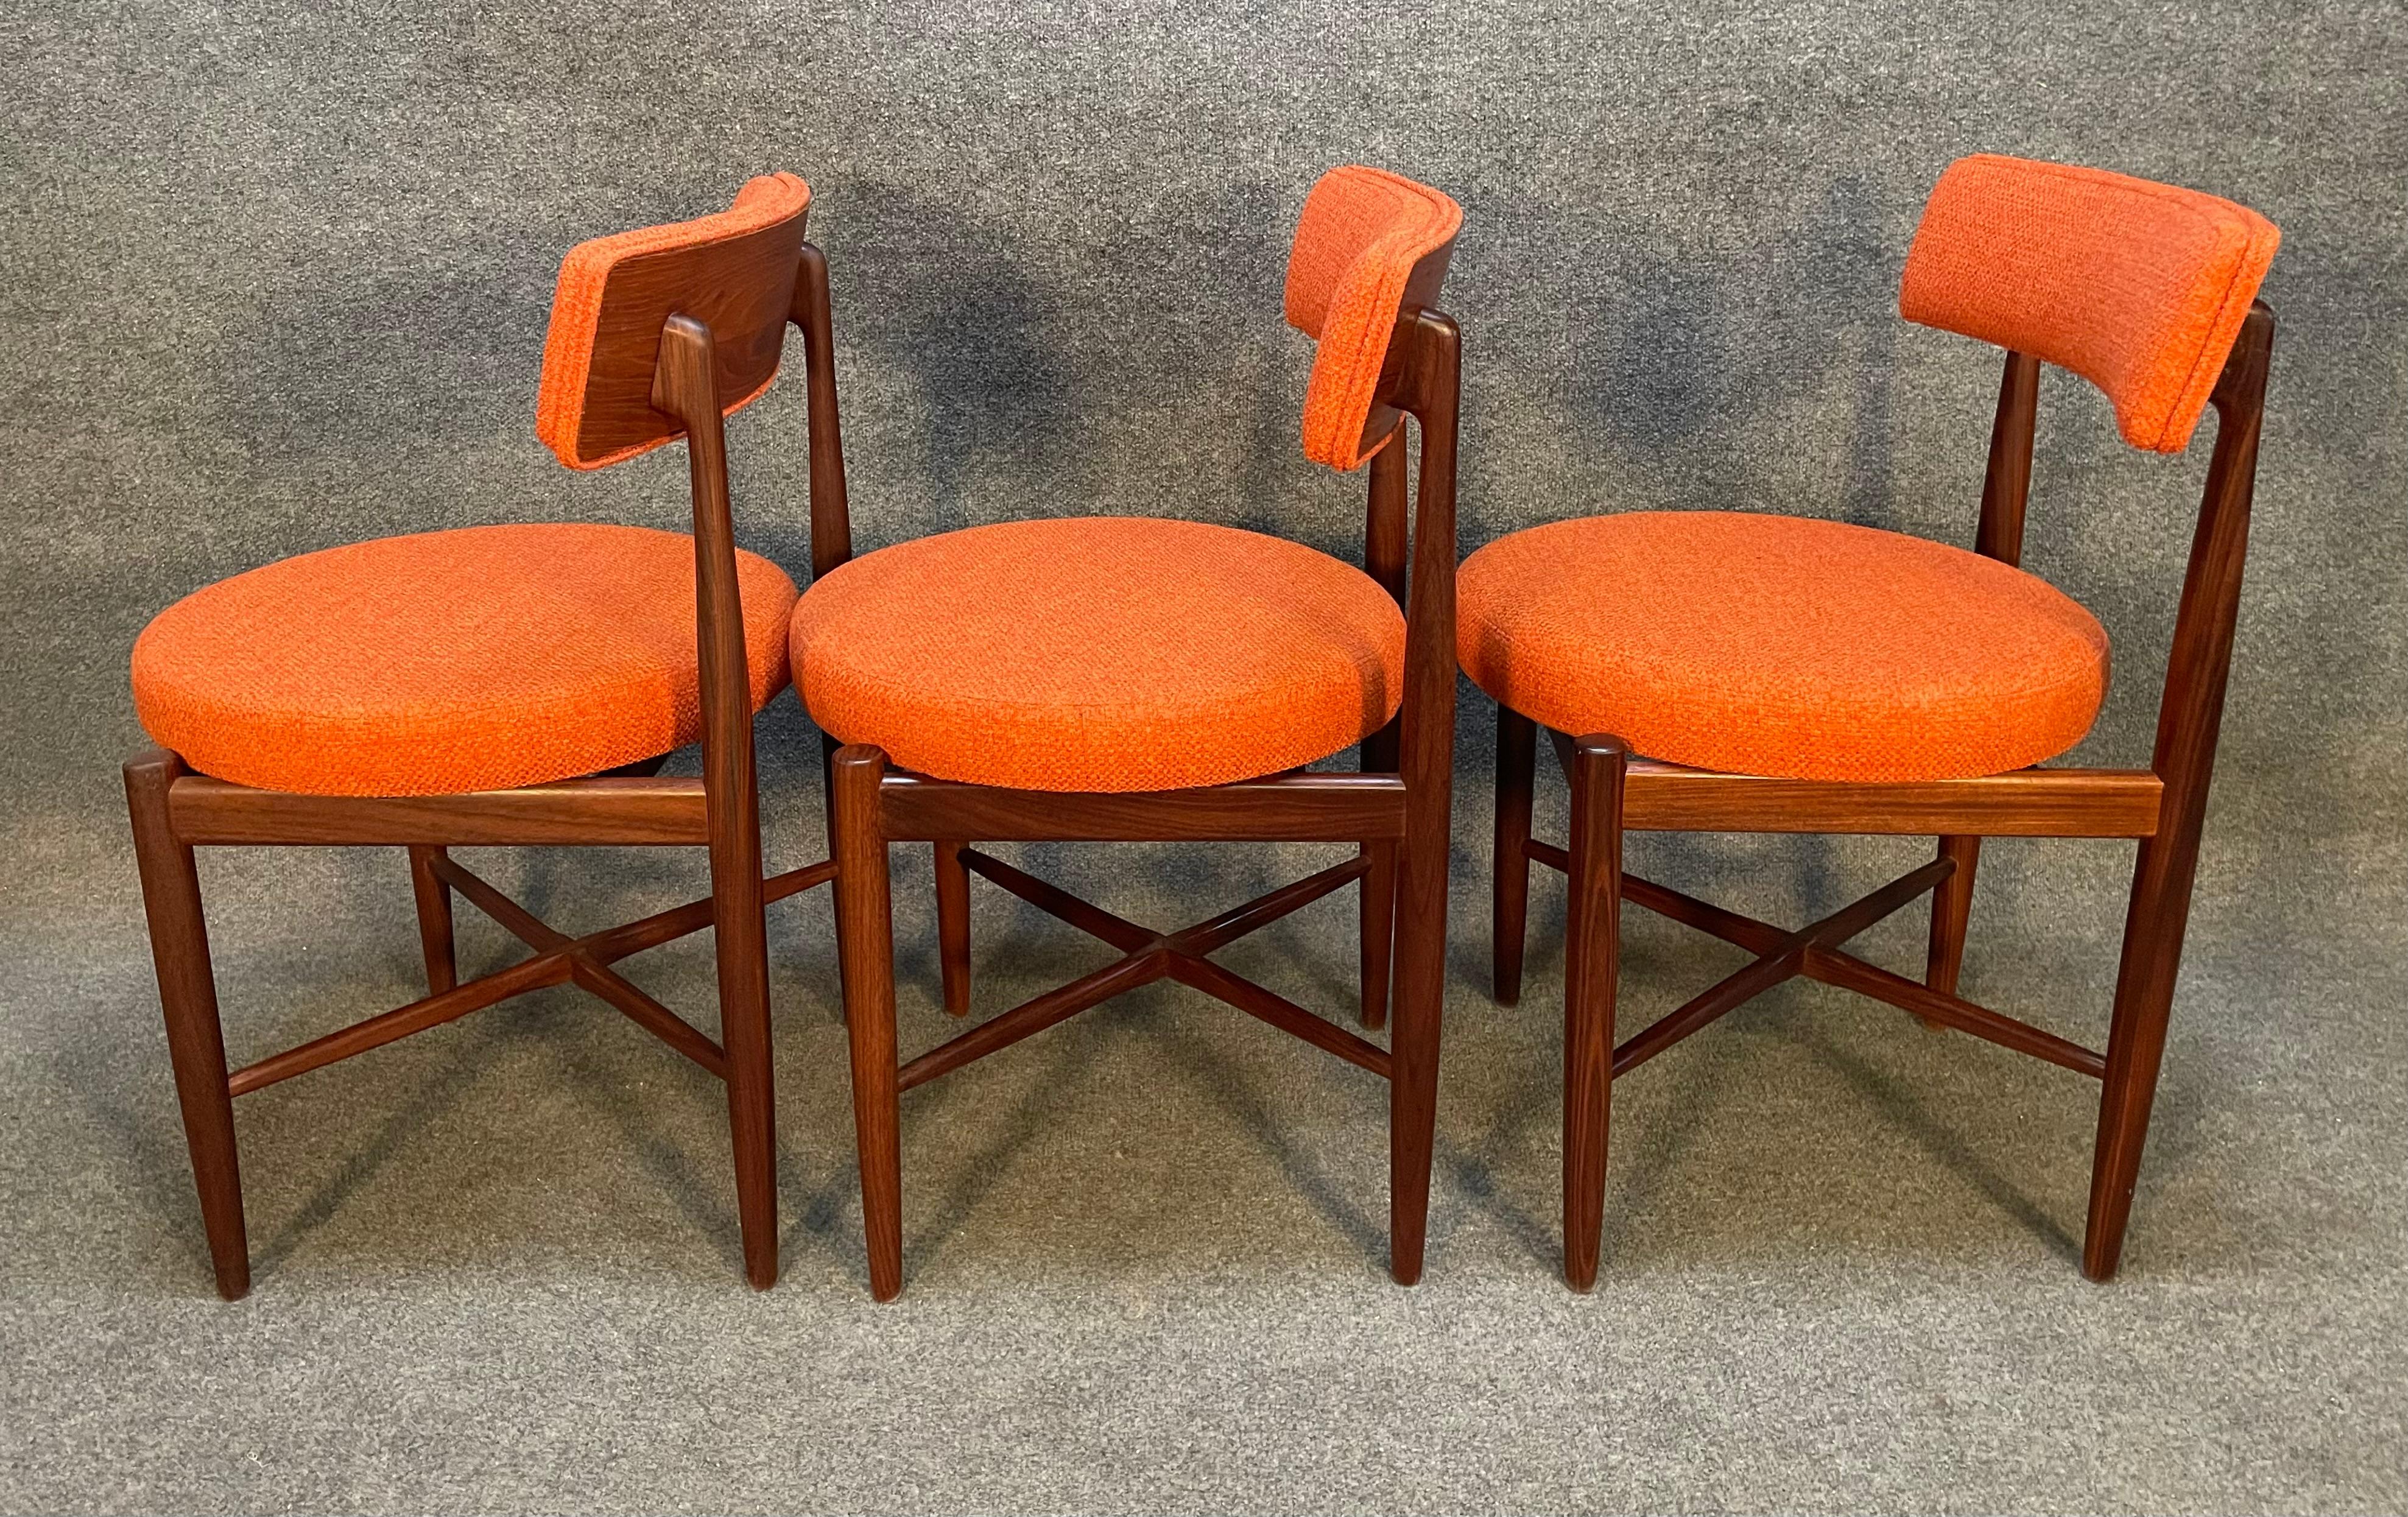 Set of Six Vintage British Mid-Century Modern Teak Dining Chairs by G Plan 1